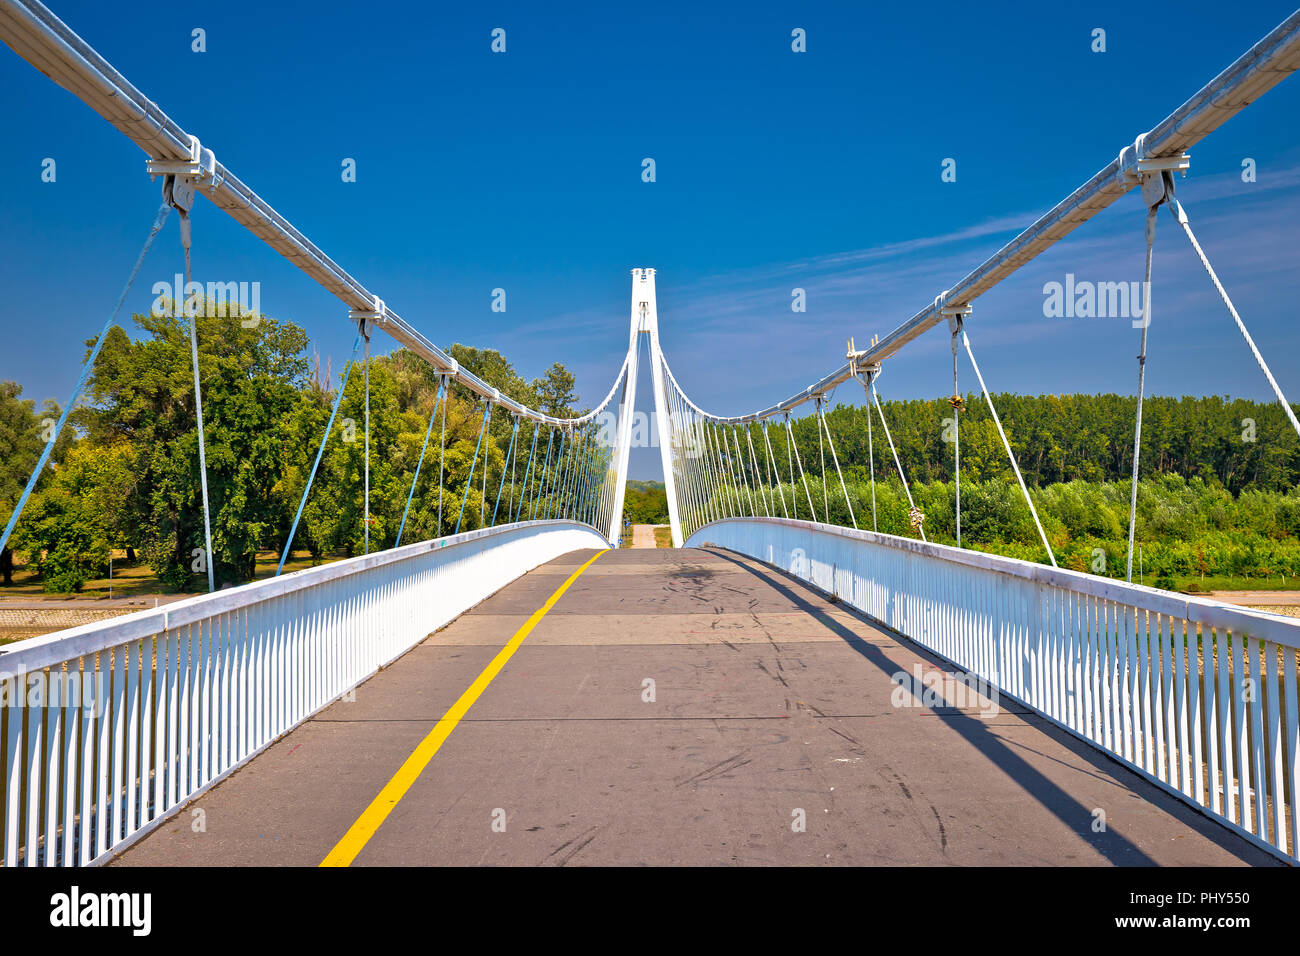 Drava river pedestrian bridge in Osijek, connecting Slavonija and Baranja regions of Croatia Stock Photo